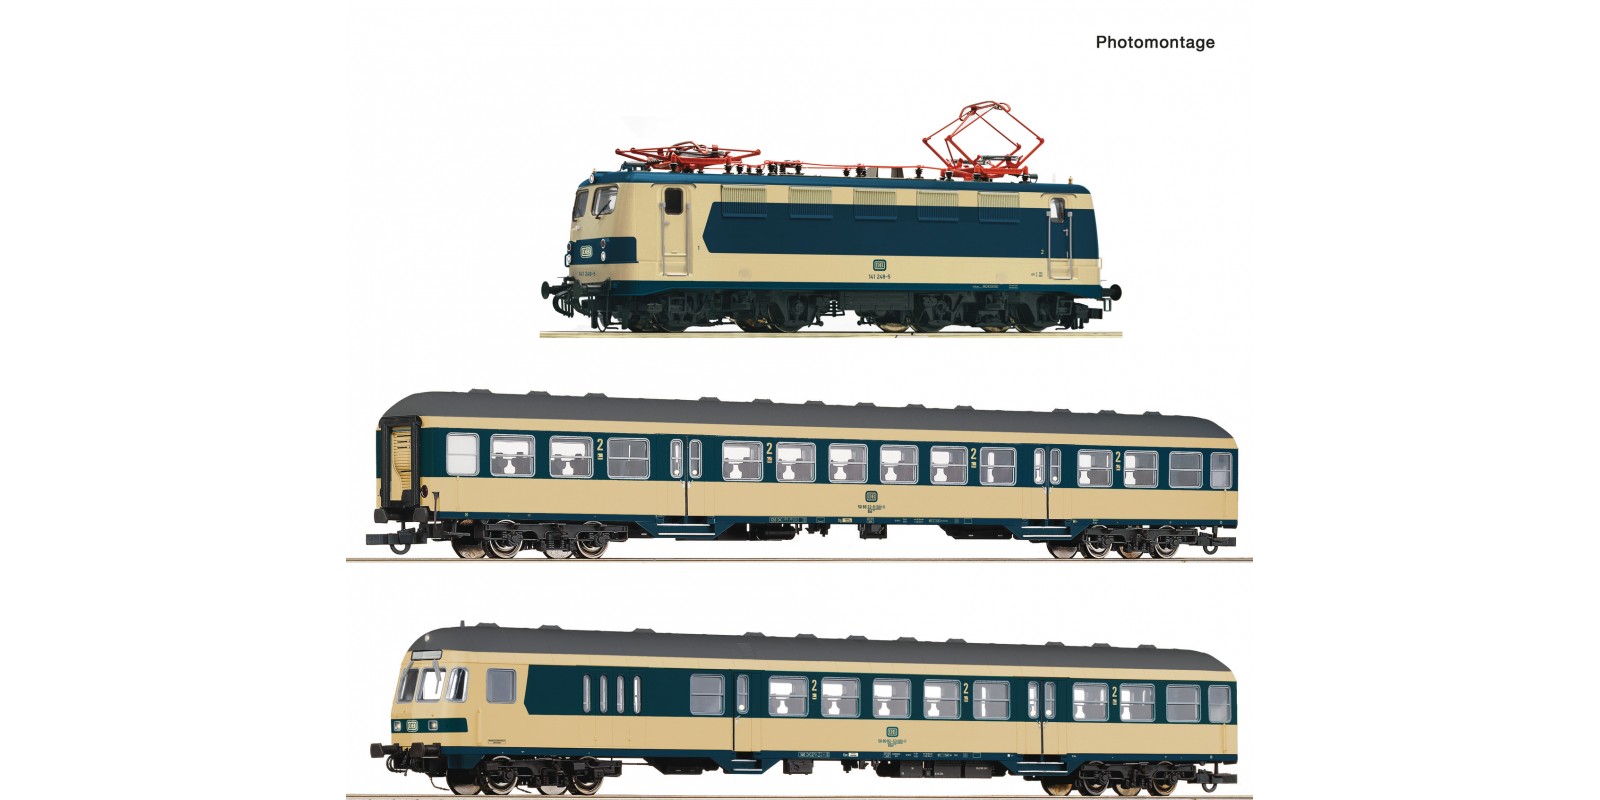 RO61483 3 piece set: The Karlsruhe train